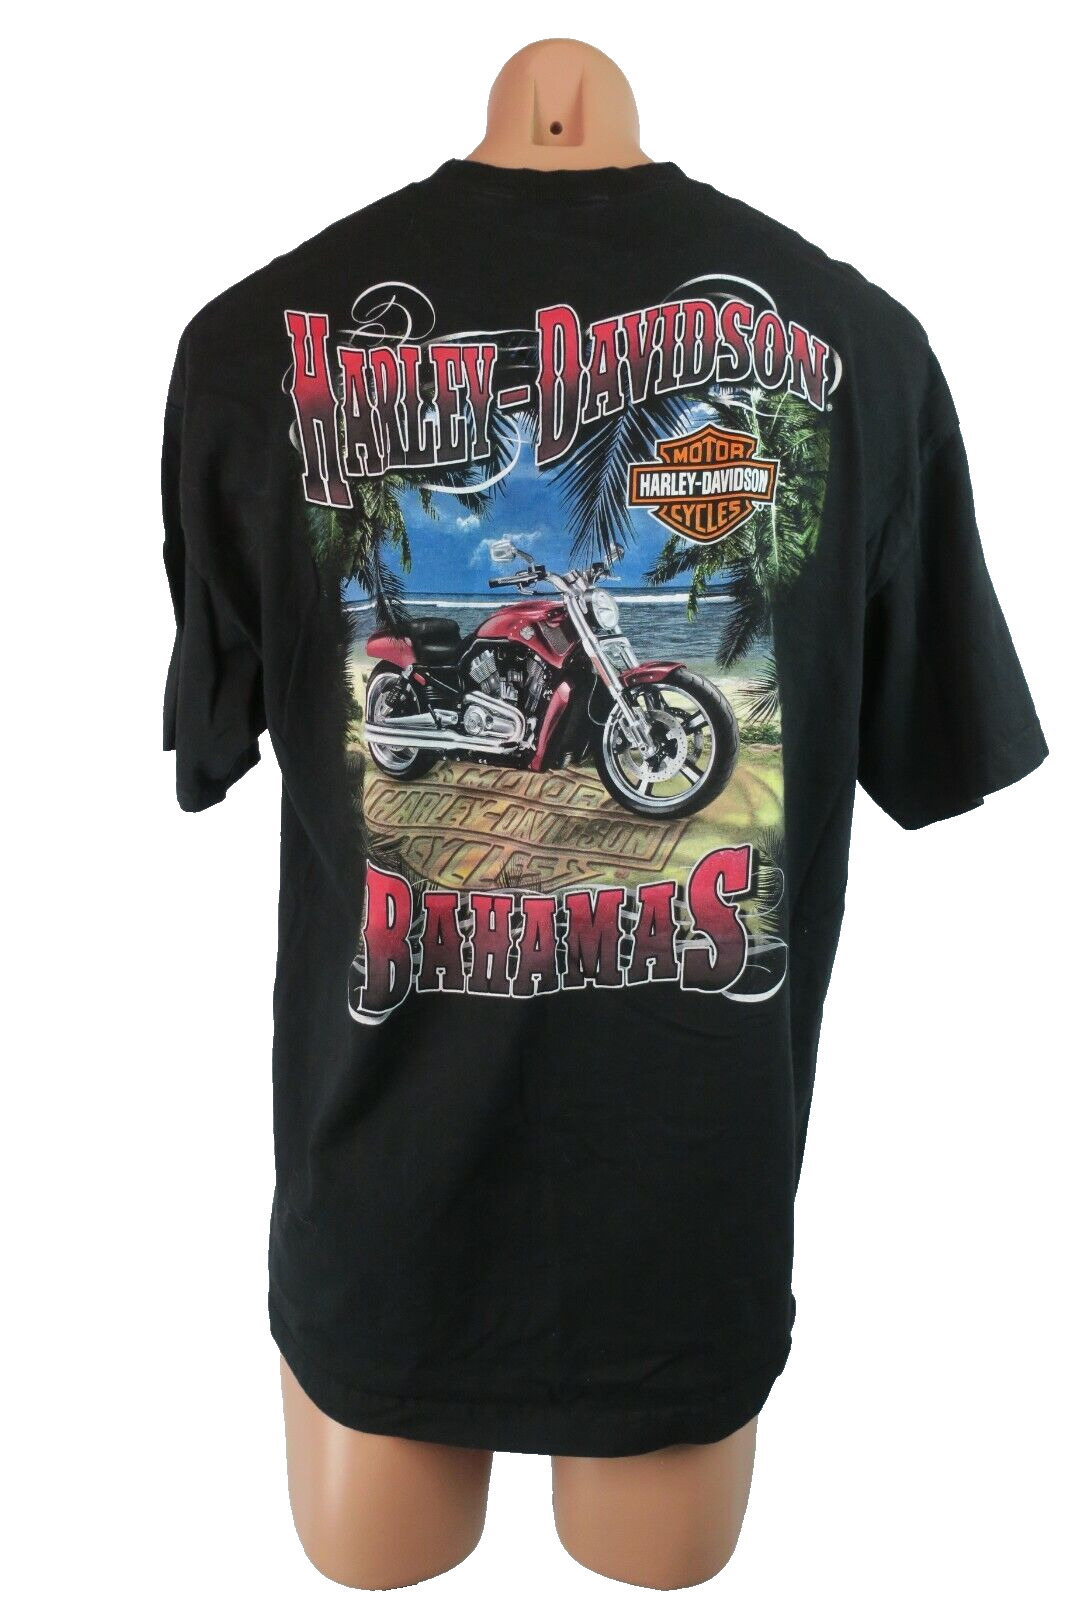 Harley Davidson Motorcycles T-Shirt Bahamas Vacation Beach sz XL Black WORN ONCE